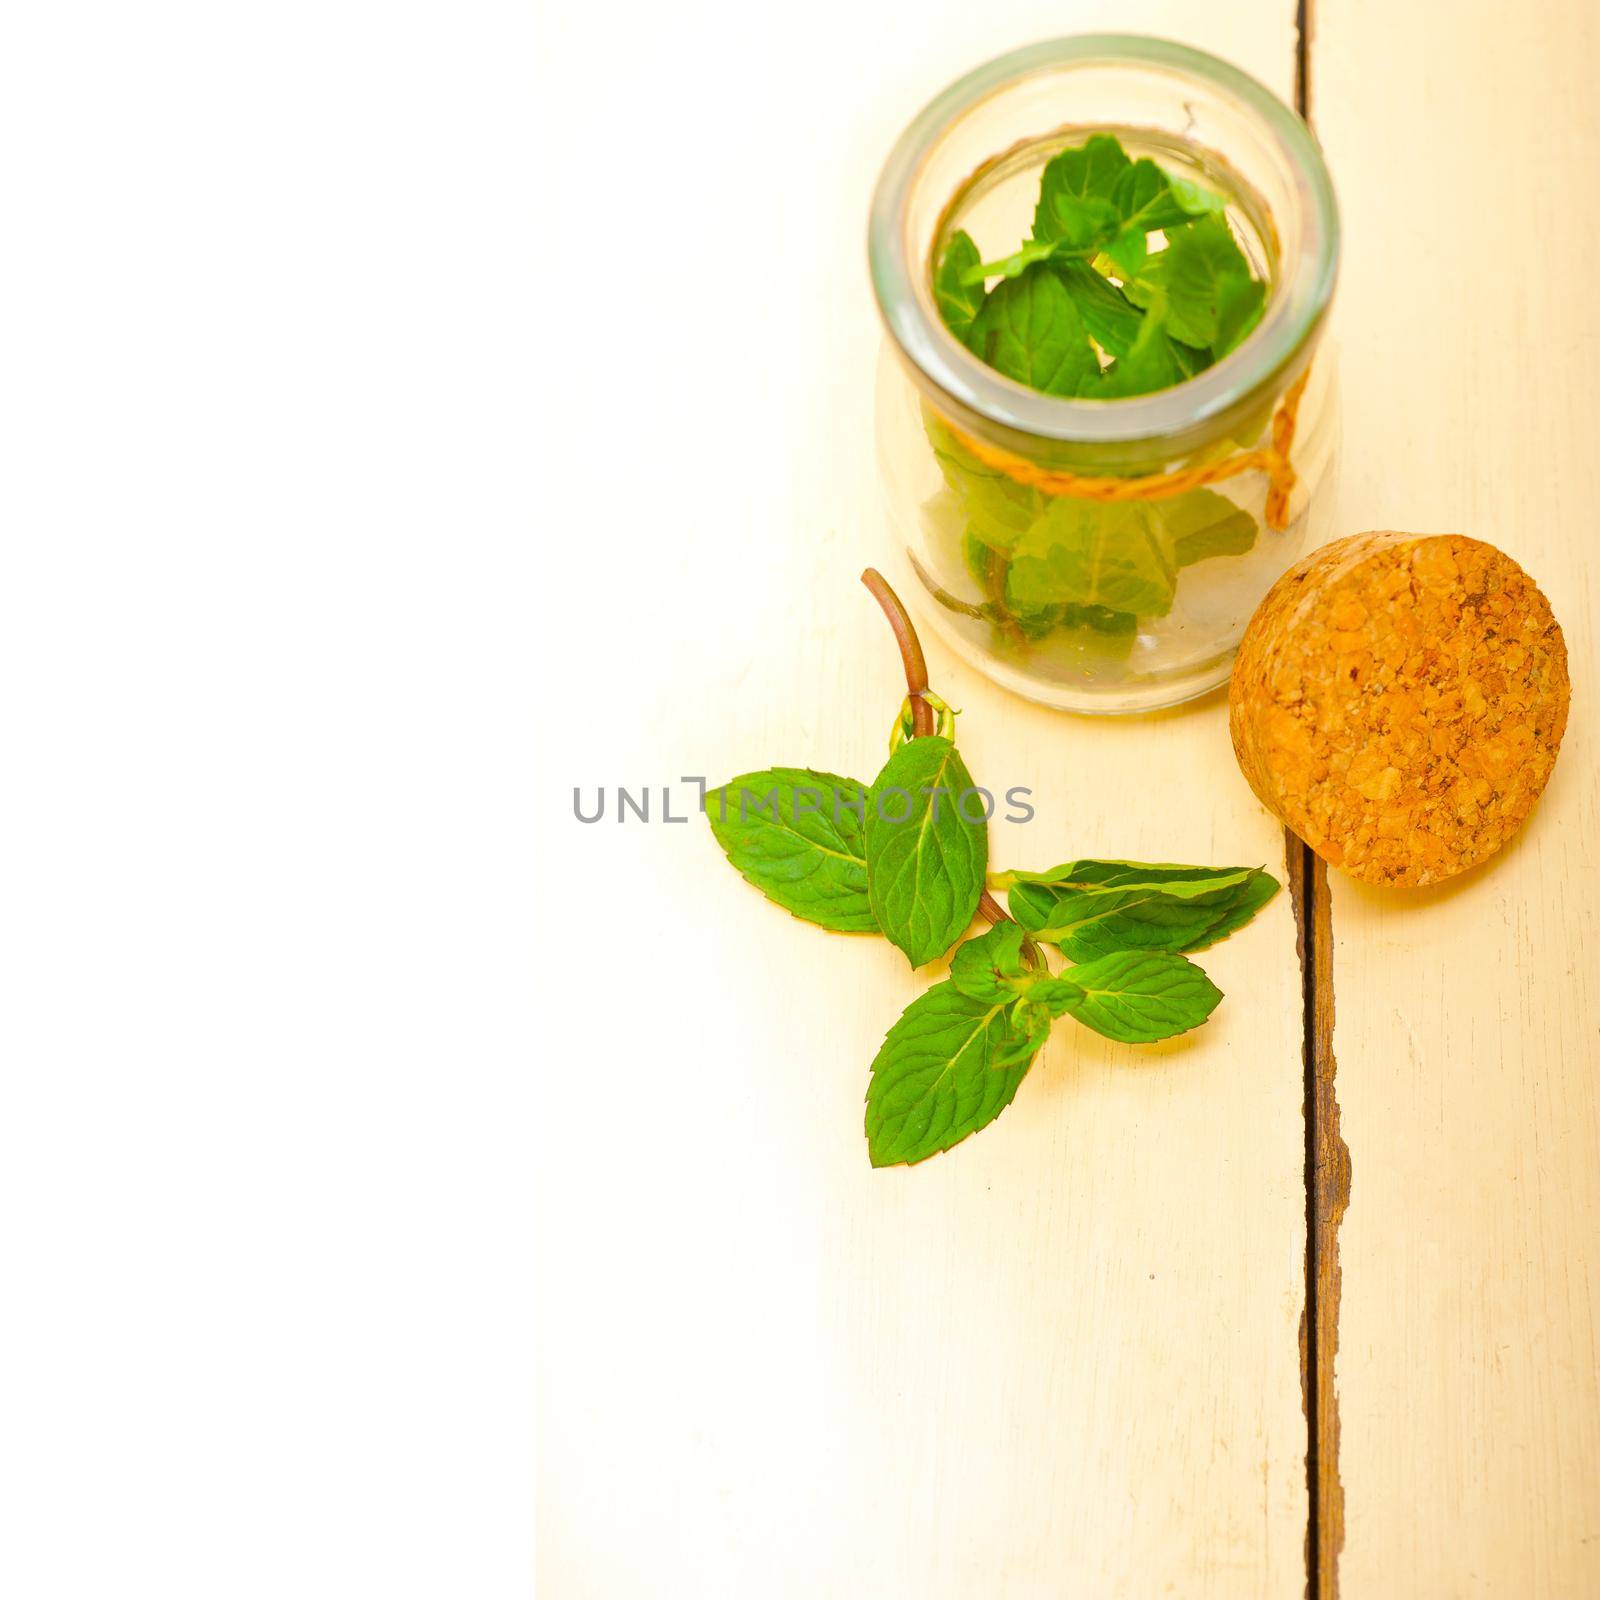 fresh mint leaves on a glass jar by keko64